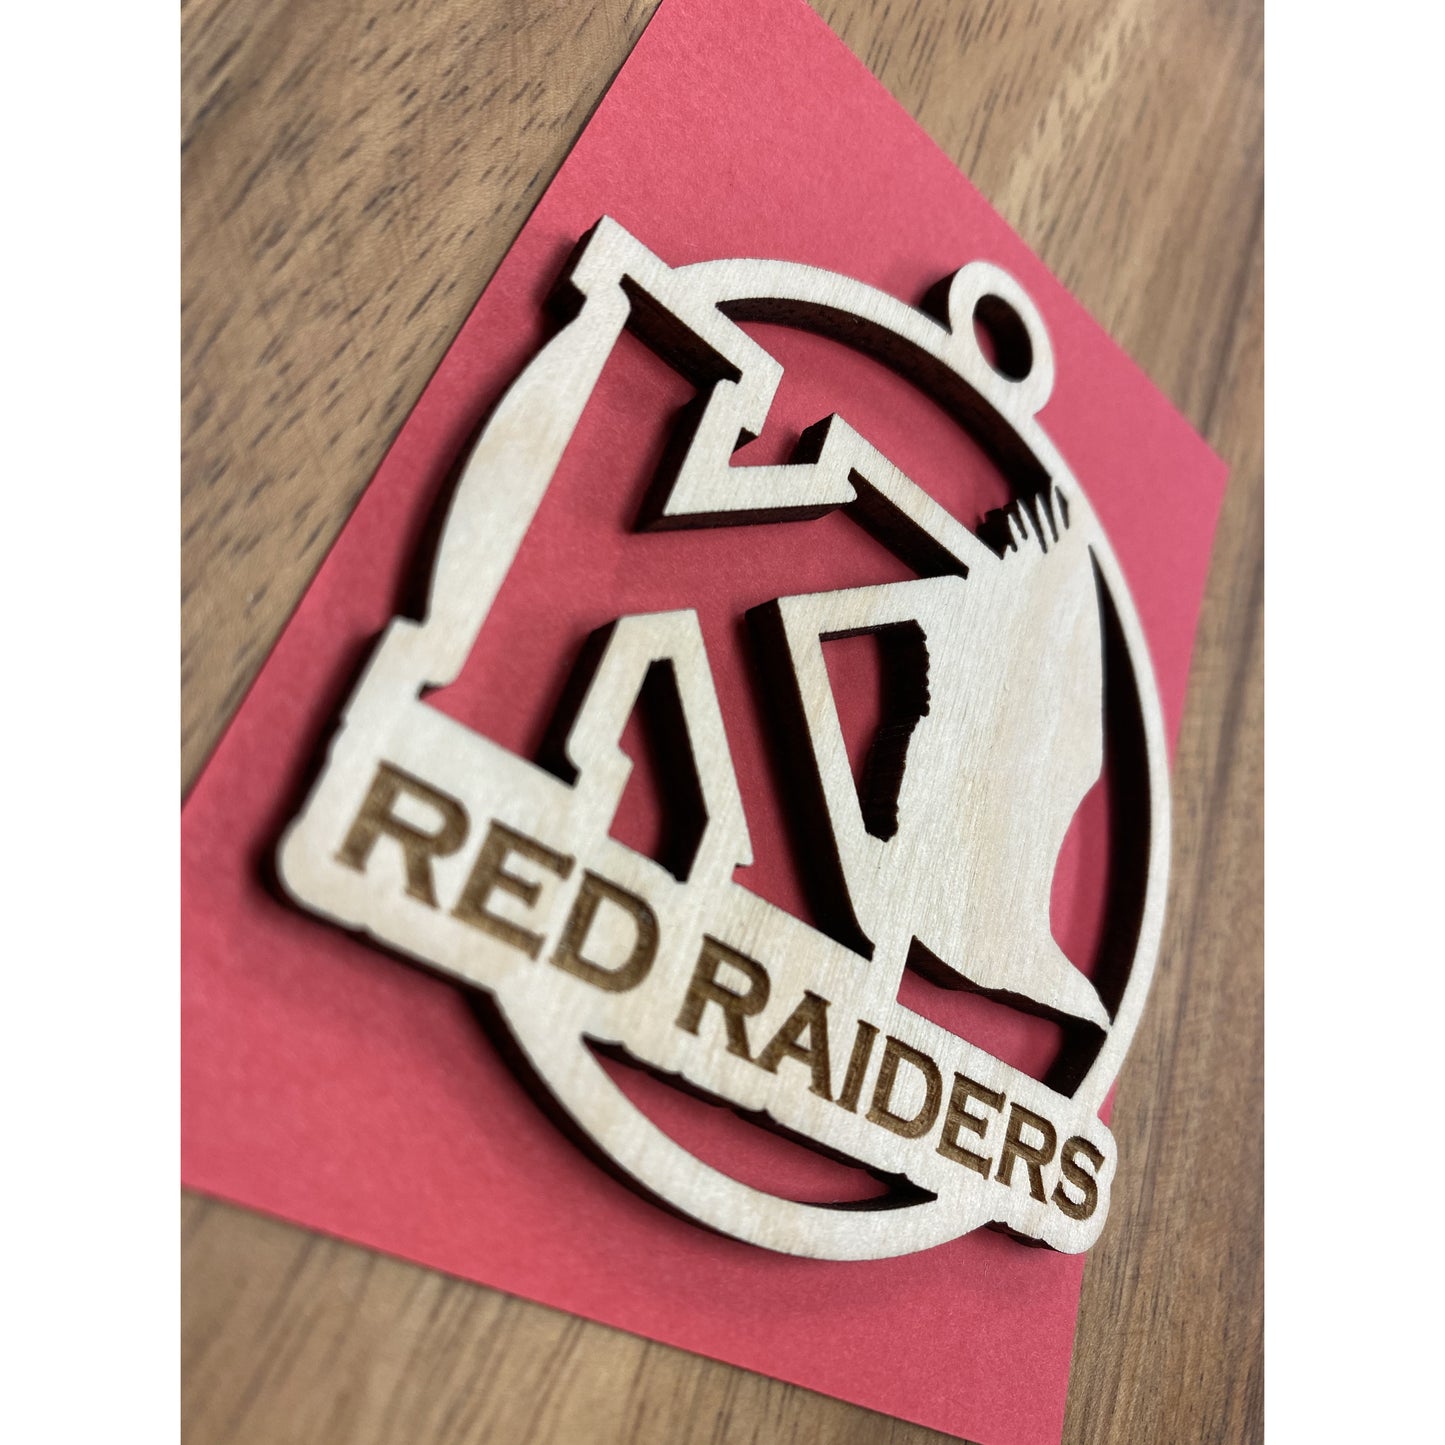 Kauai Red Raiders Keepsake